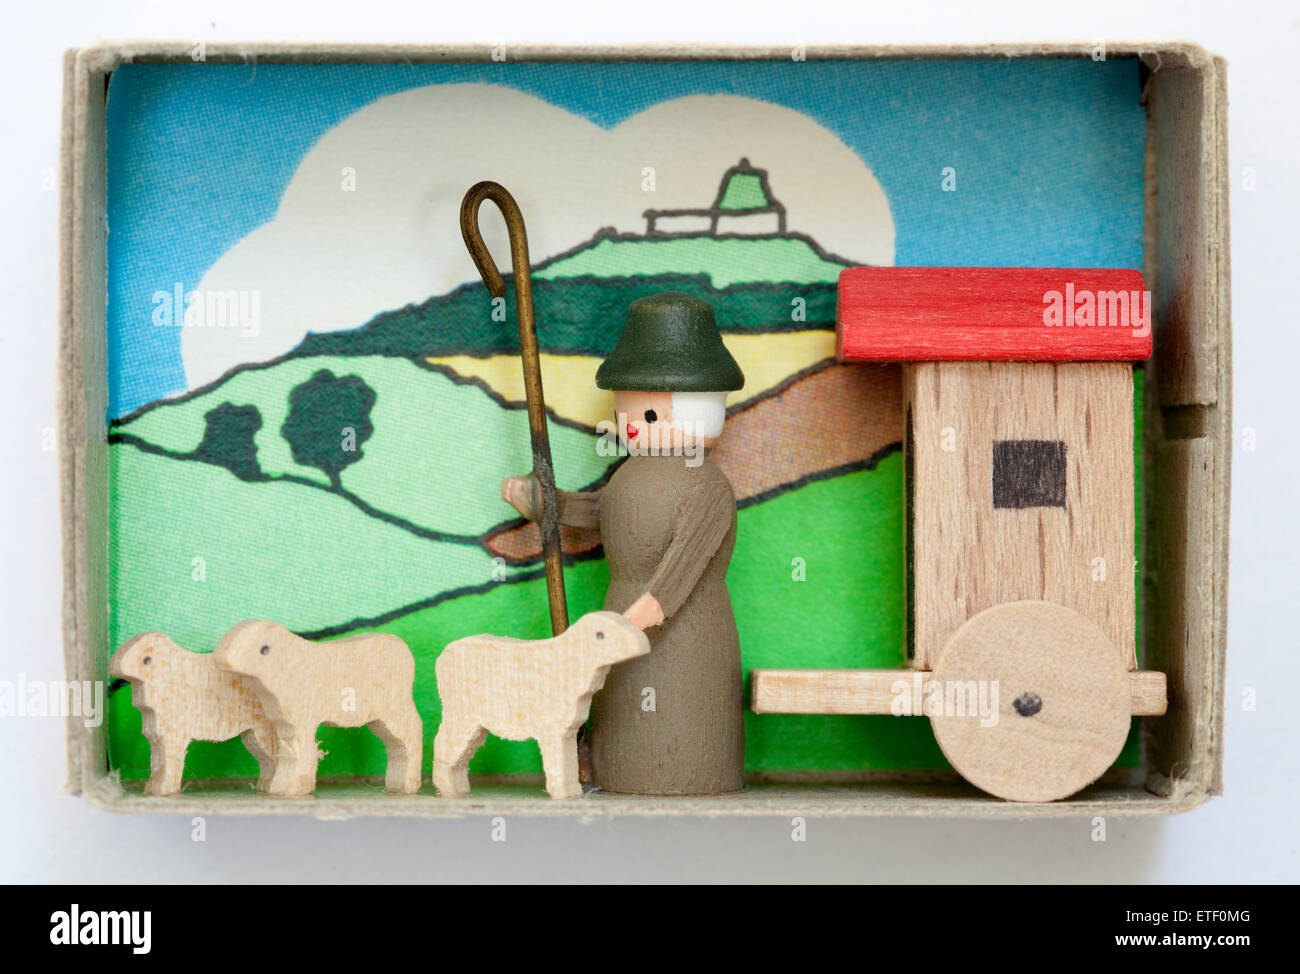 Vintage Caja de fósforos de madera hecha a mano que contiene arte popular juguete. En der Zundholzschachtel Erzgebirgische Volkskunst Foto de stock